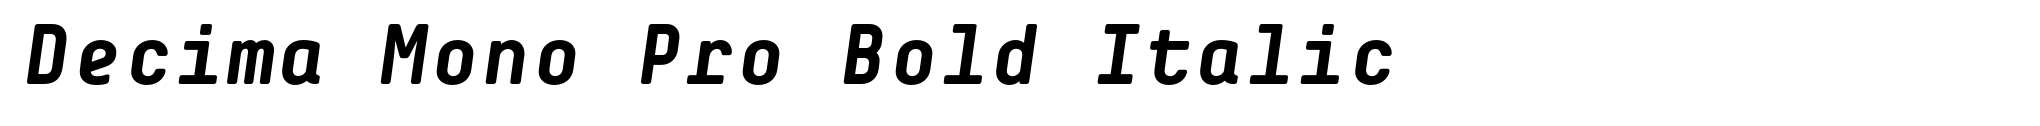 Decima Mono Pro Bold Italic image